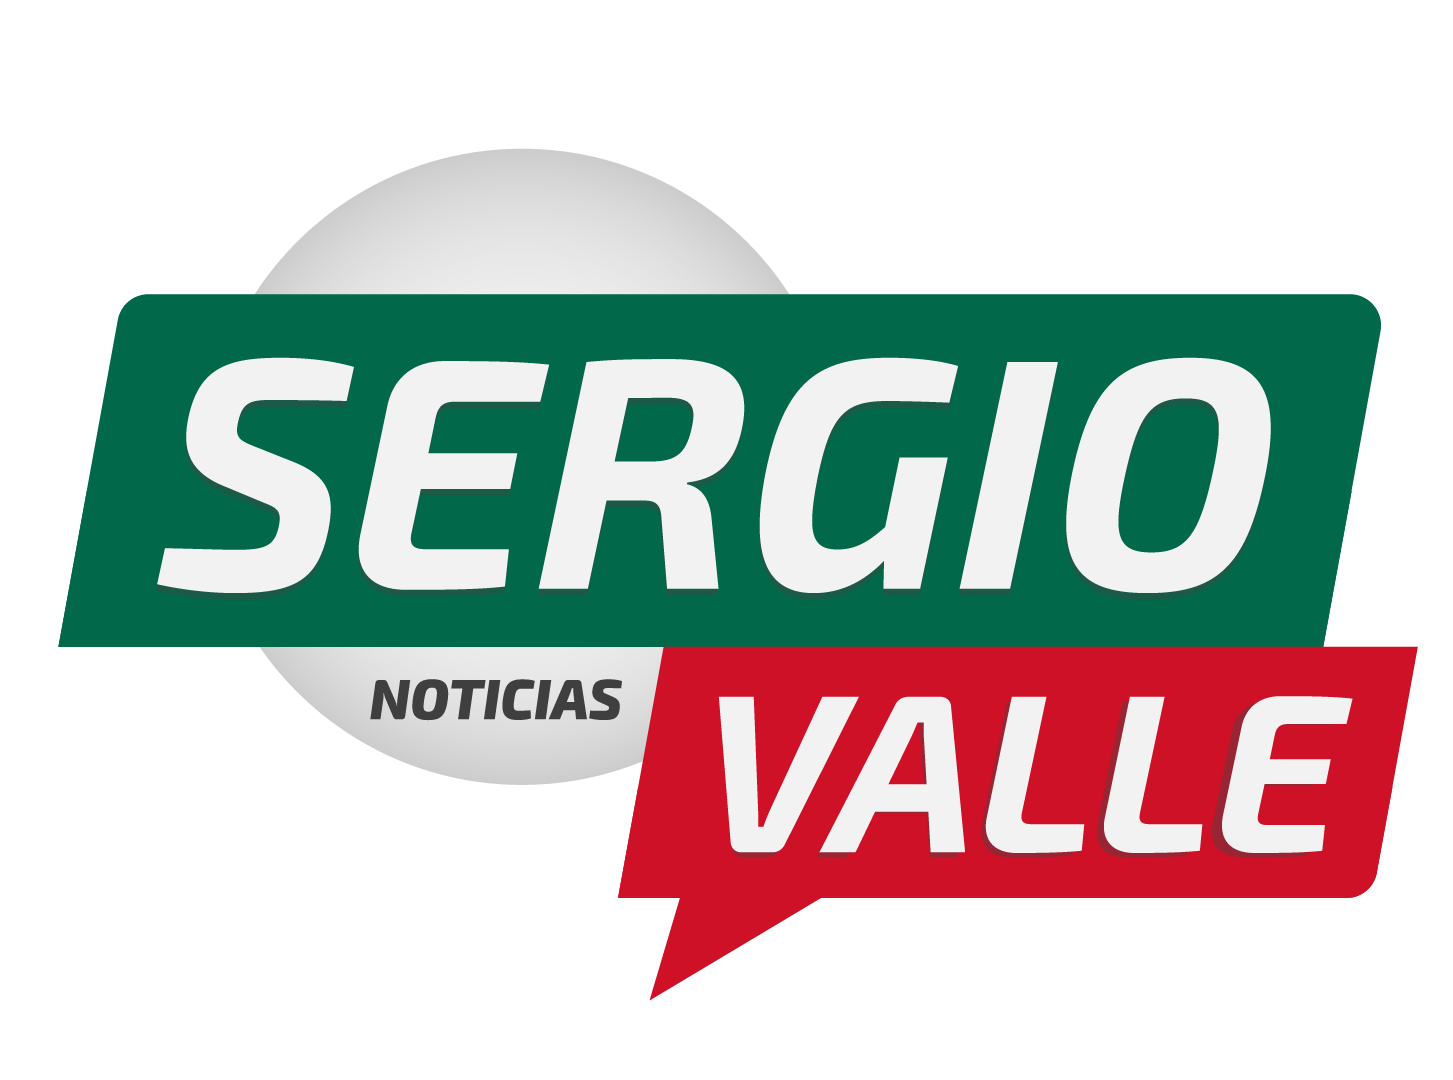 Sergio Valle